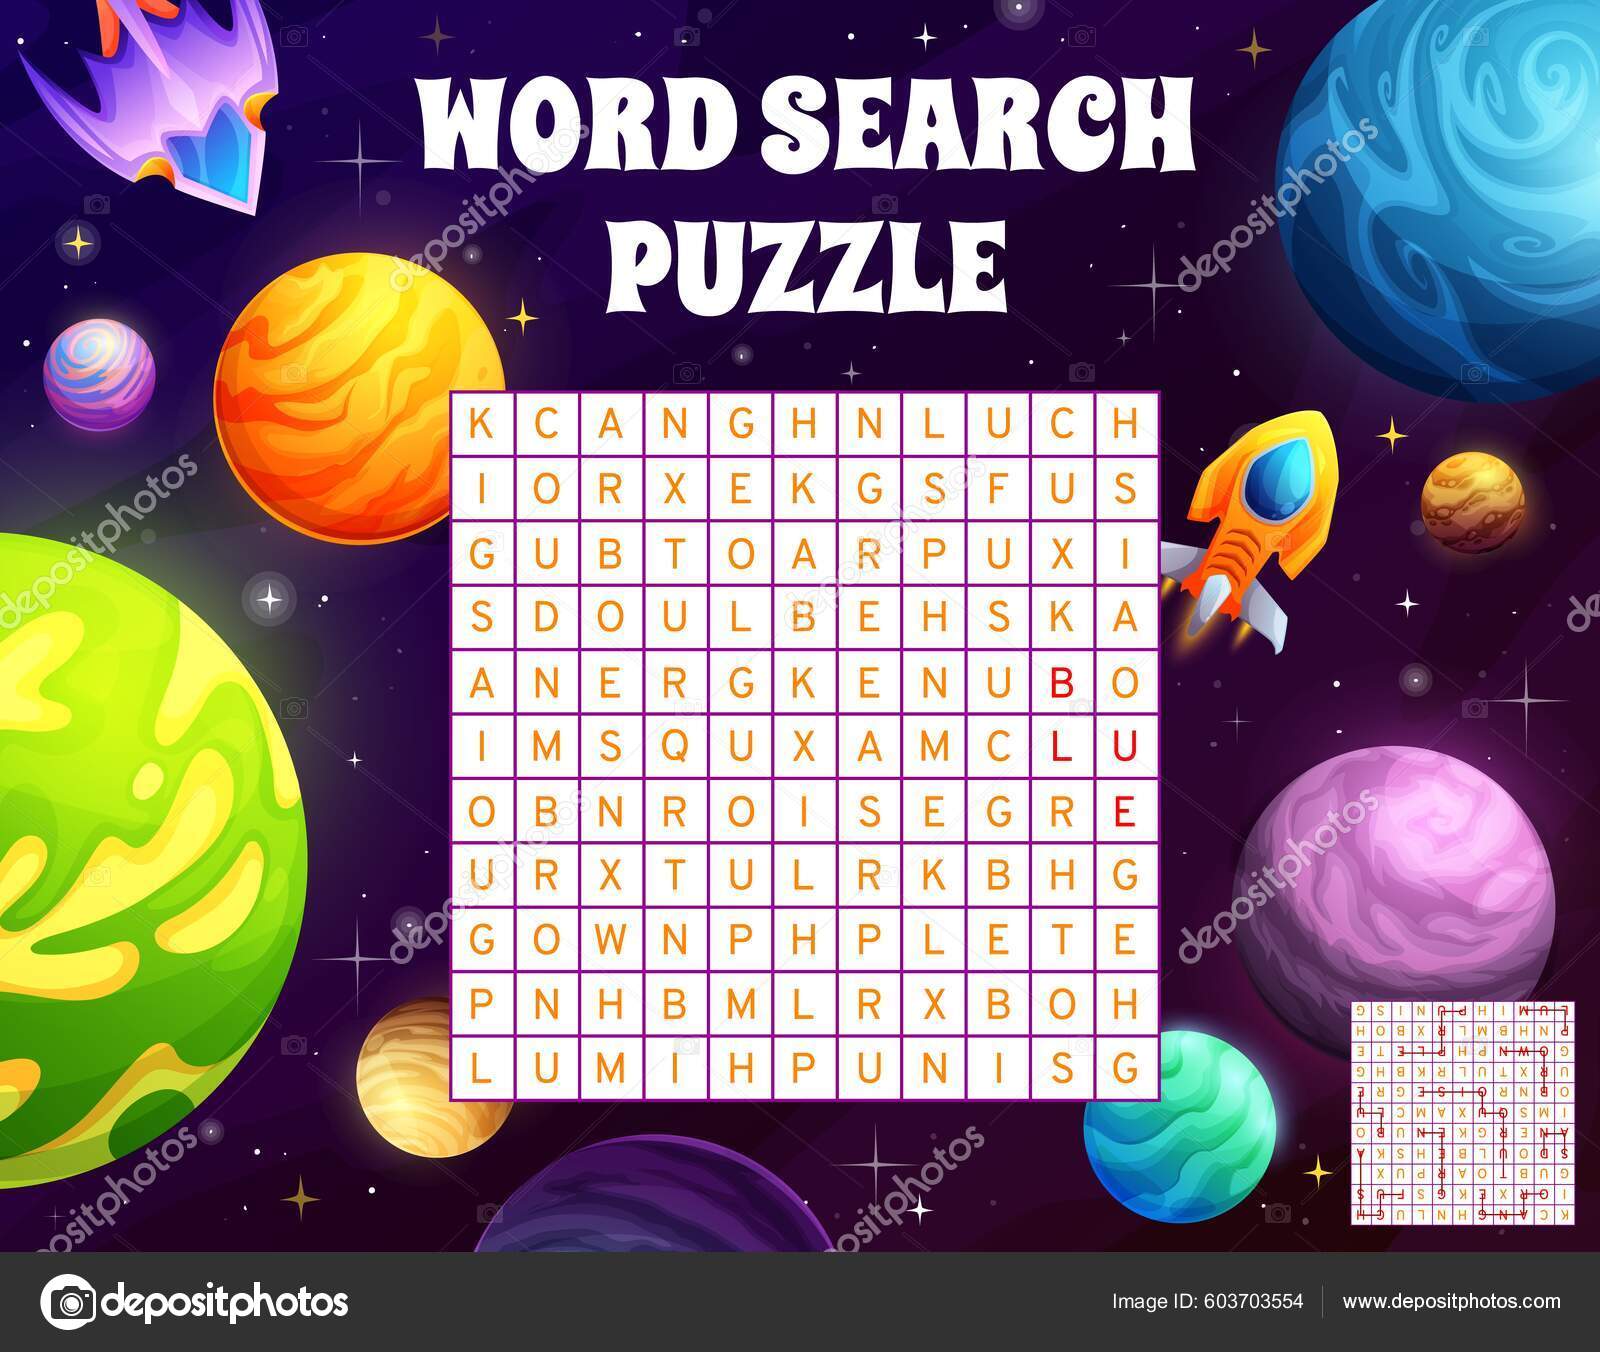 Conteo del 1 al 9 worksheet  Word search puzzle, Words, Search